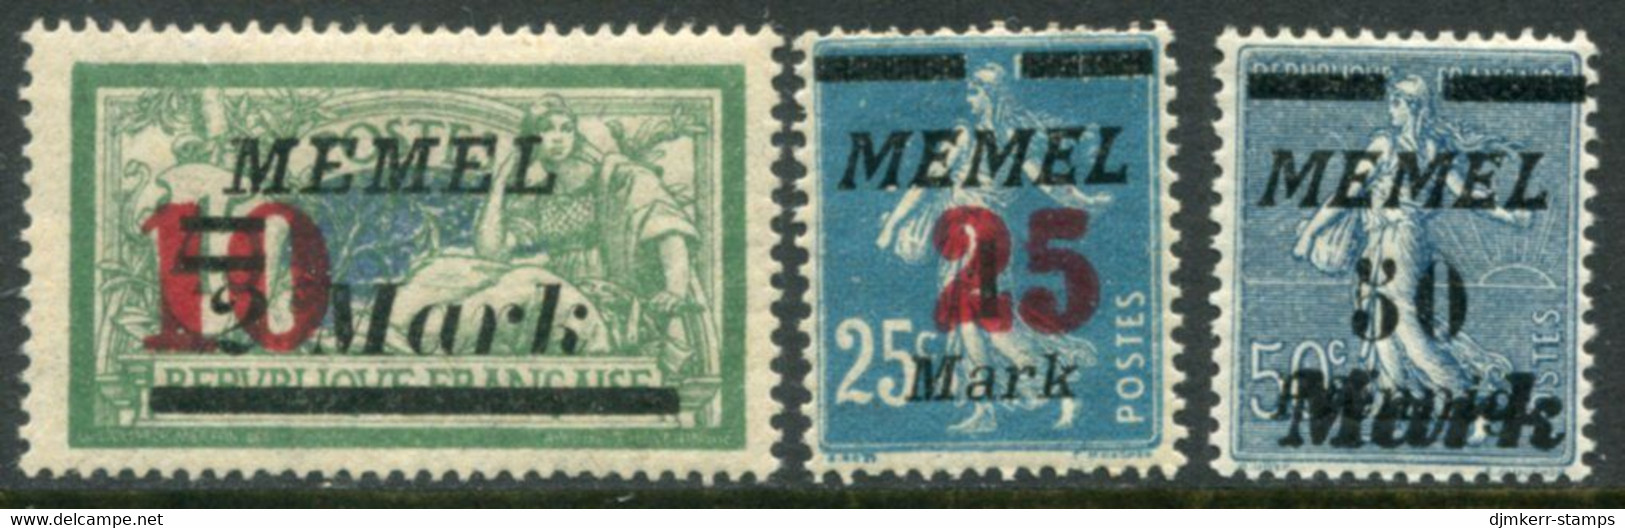 MEMEL  (Lithanian Occ.) 1923 Overprints On France LHM / *.  Michel 121-23 - Memel (Klaïpeda) 1923